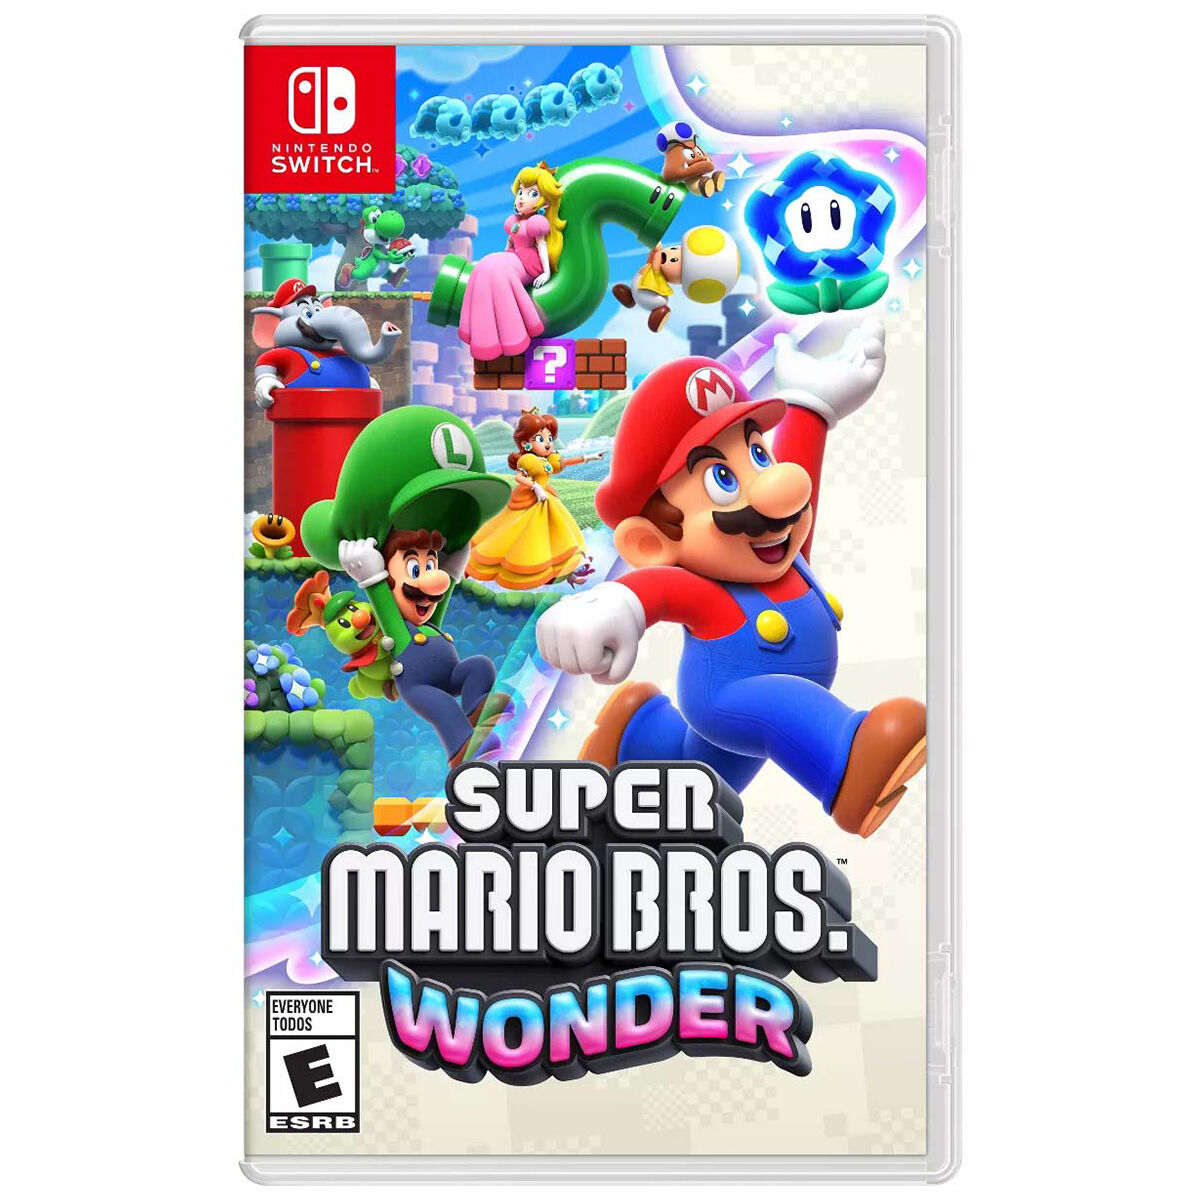 Super Mario Bros Wonder for Nintendo Switch | P.C. Richard & Son